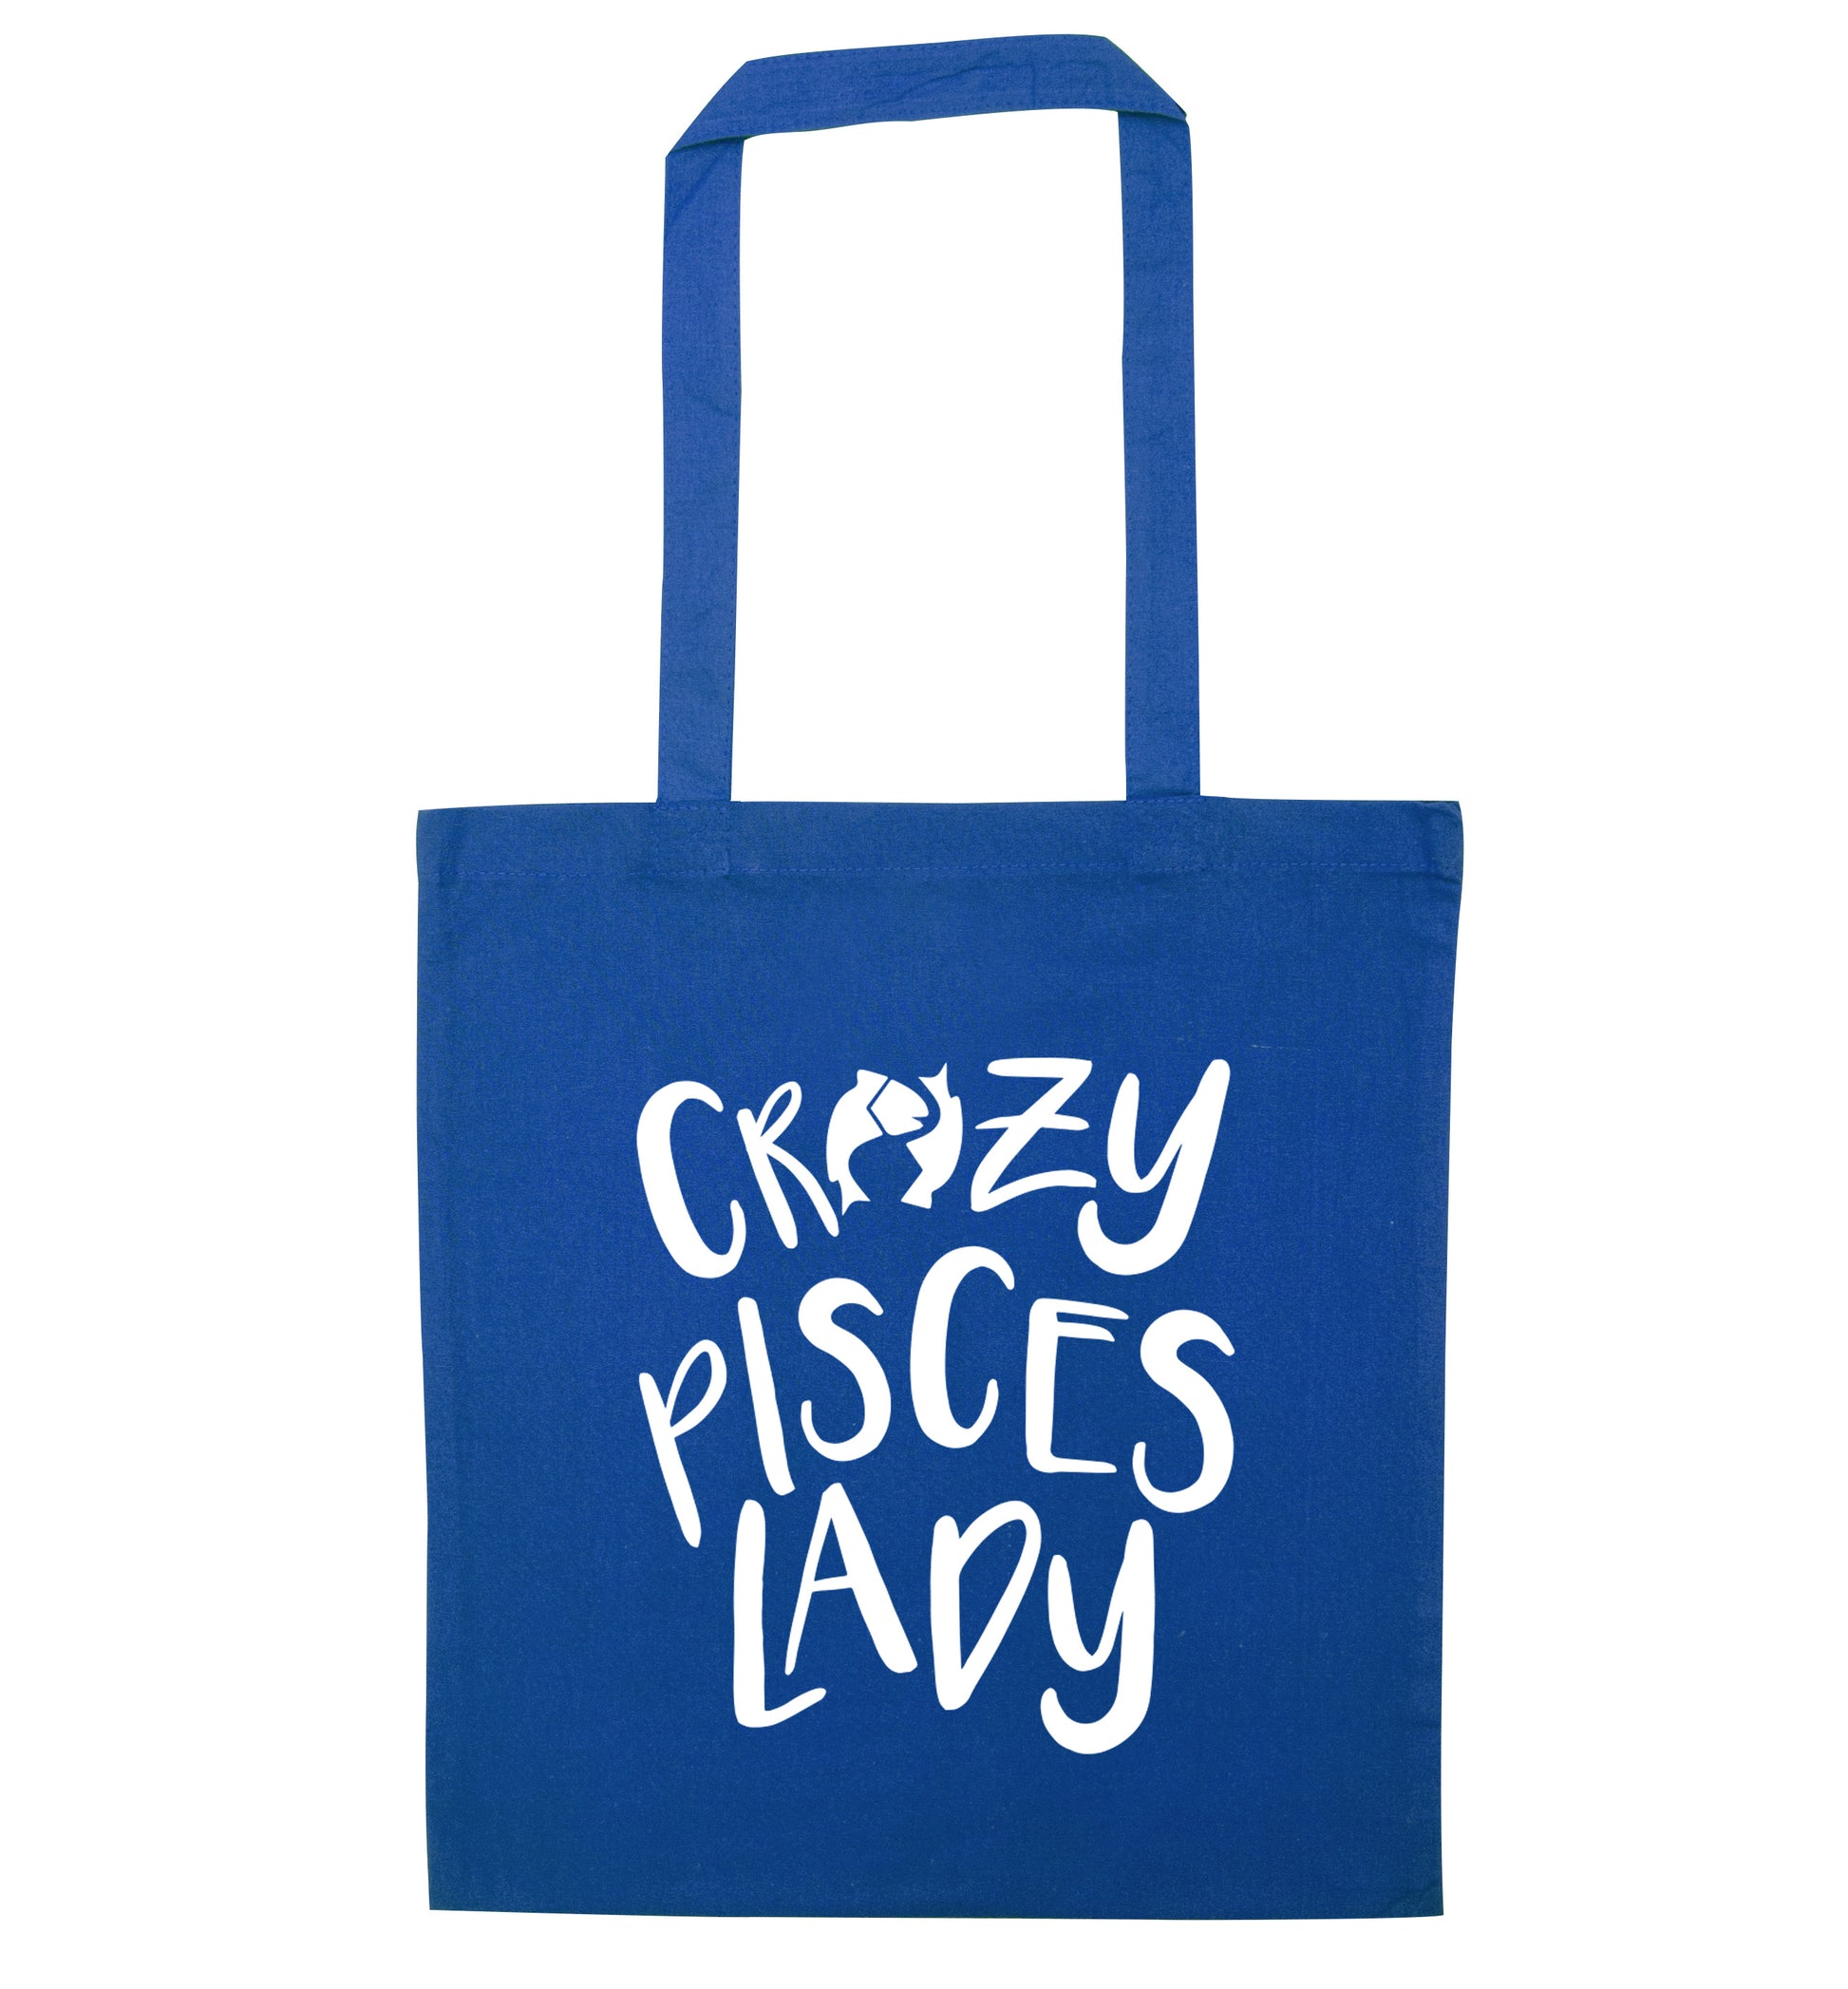 Crazy pisces Lady blue tote bag